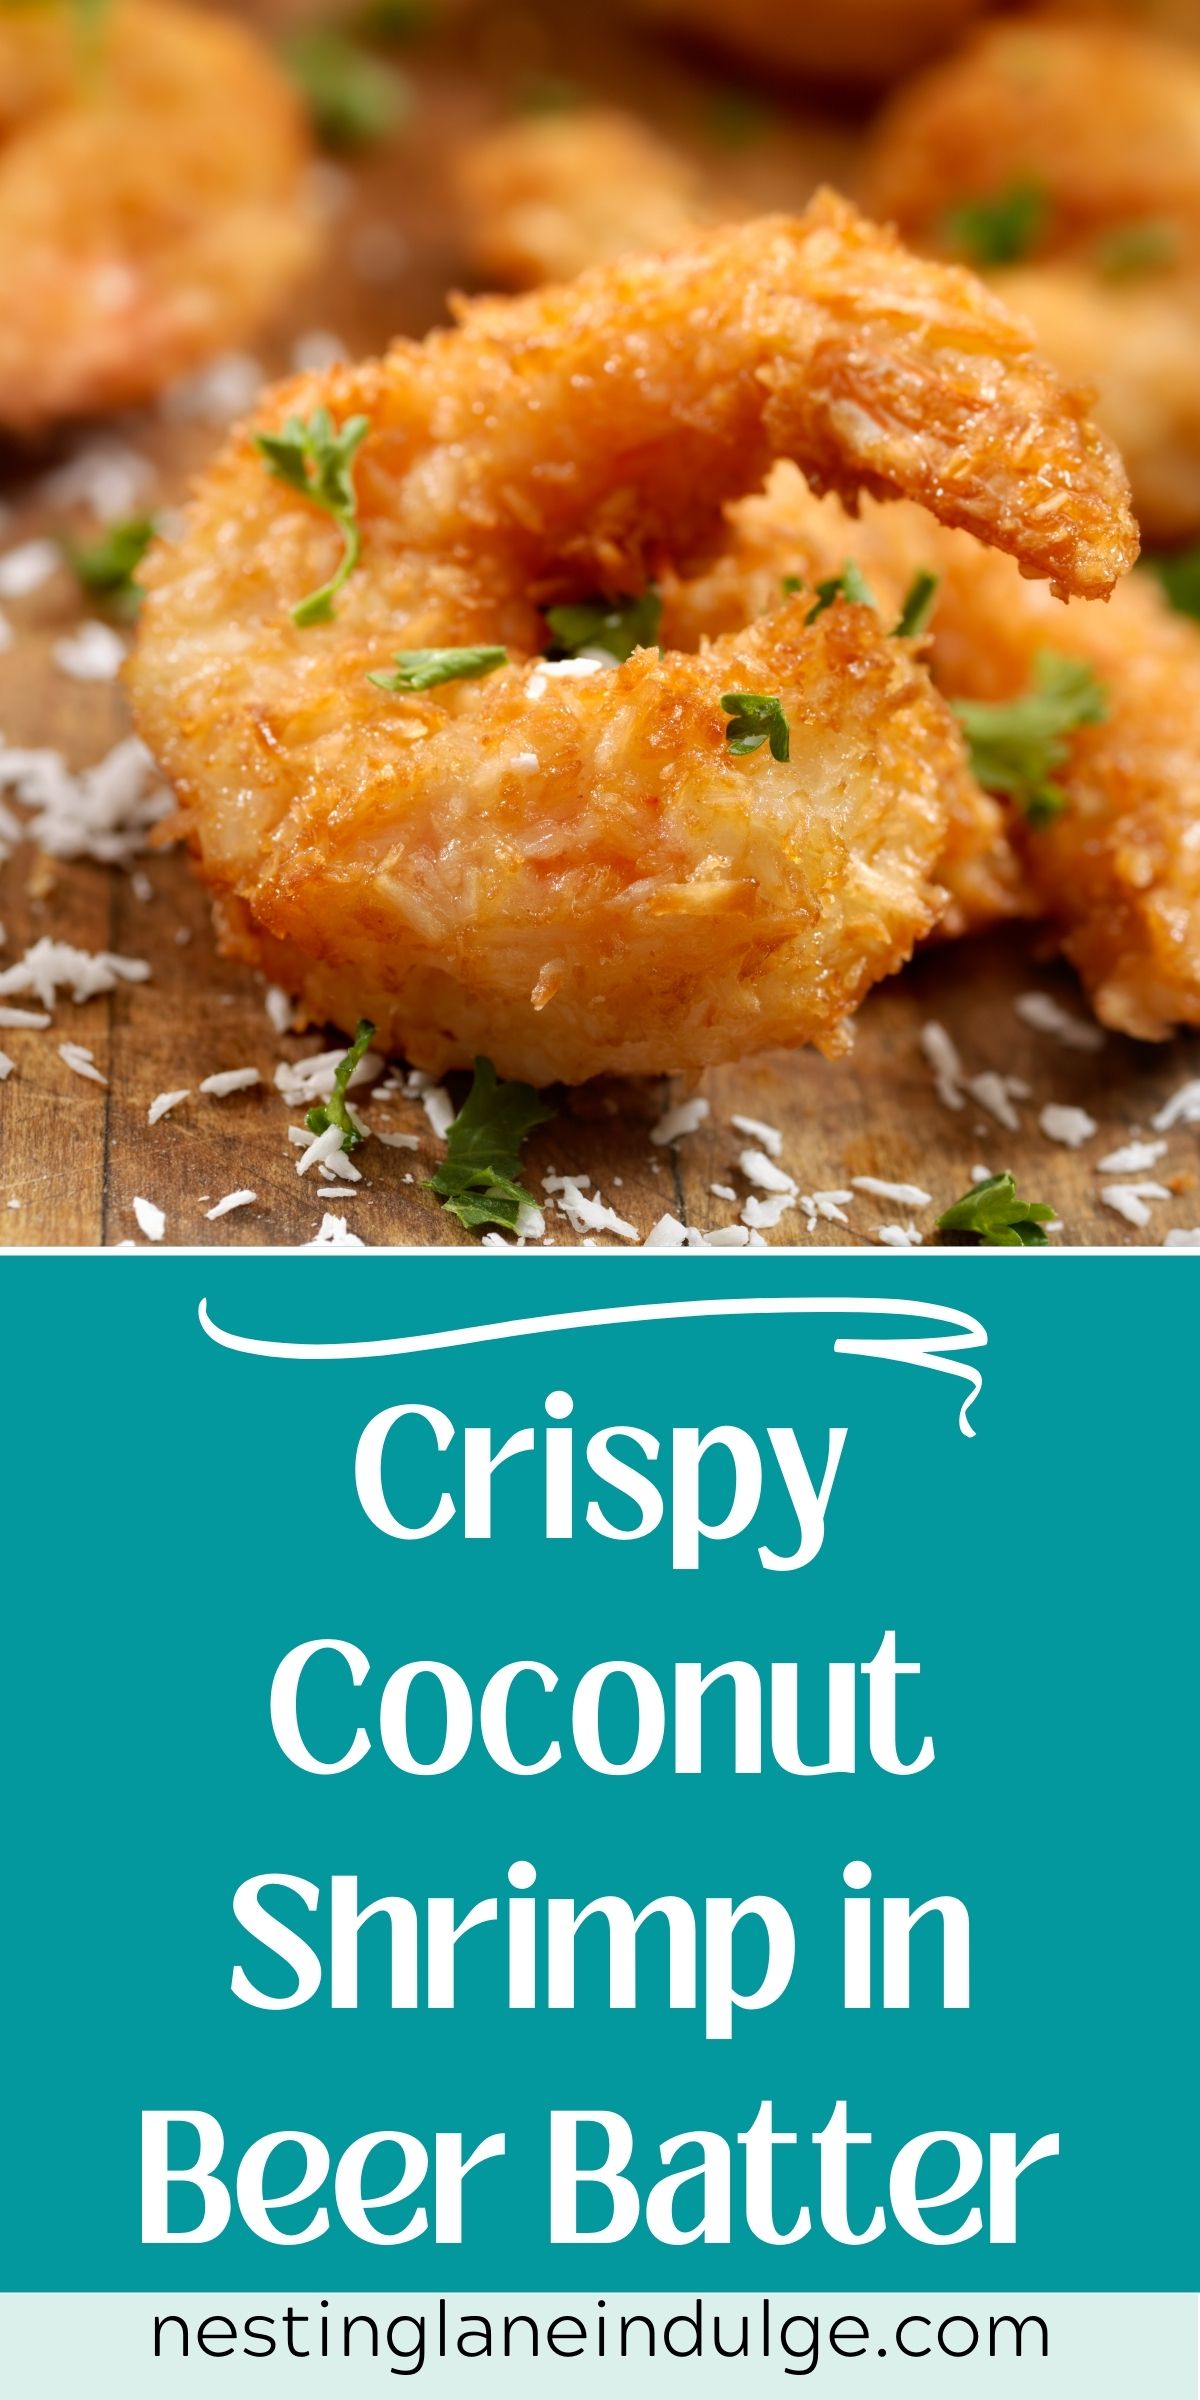 Graphic for Pinterest of Crispy Coconut Shrimp in Beer Batter.